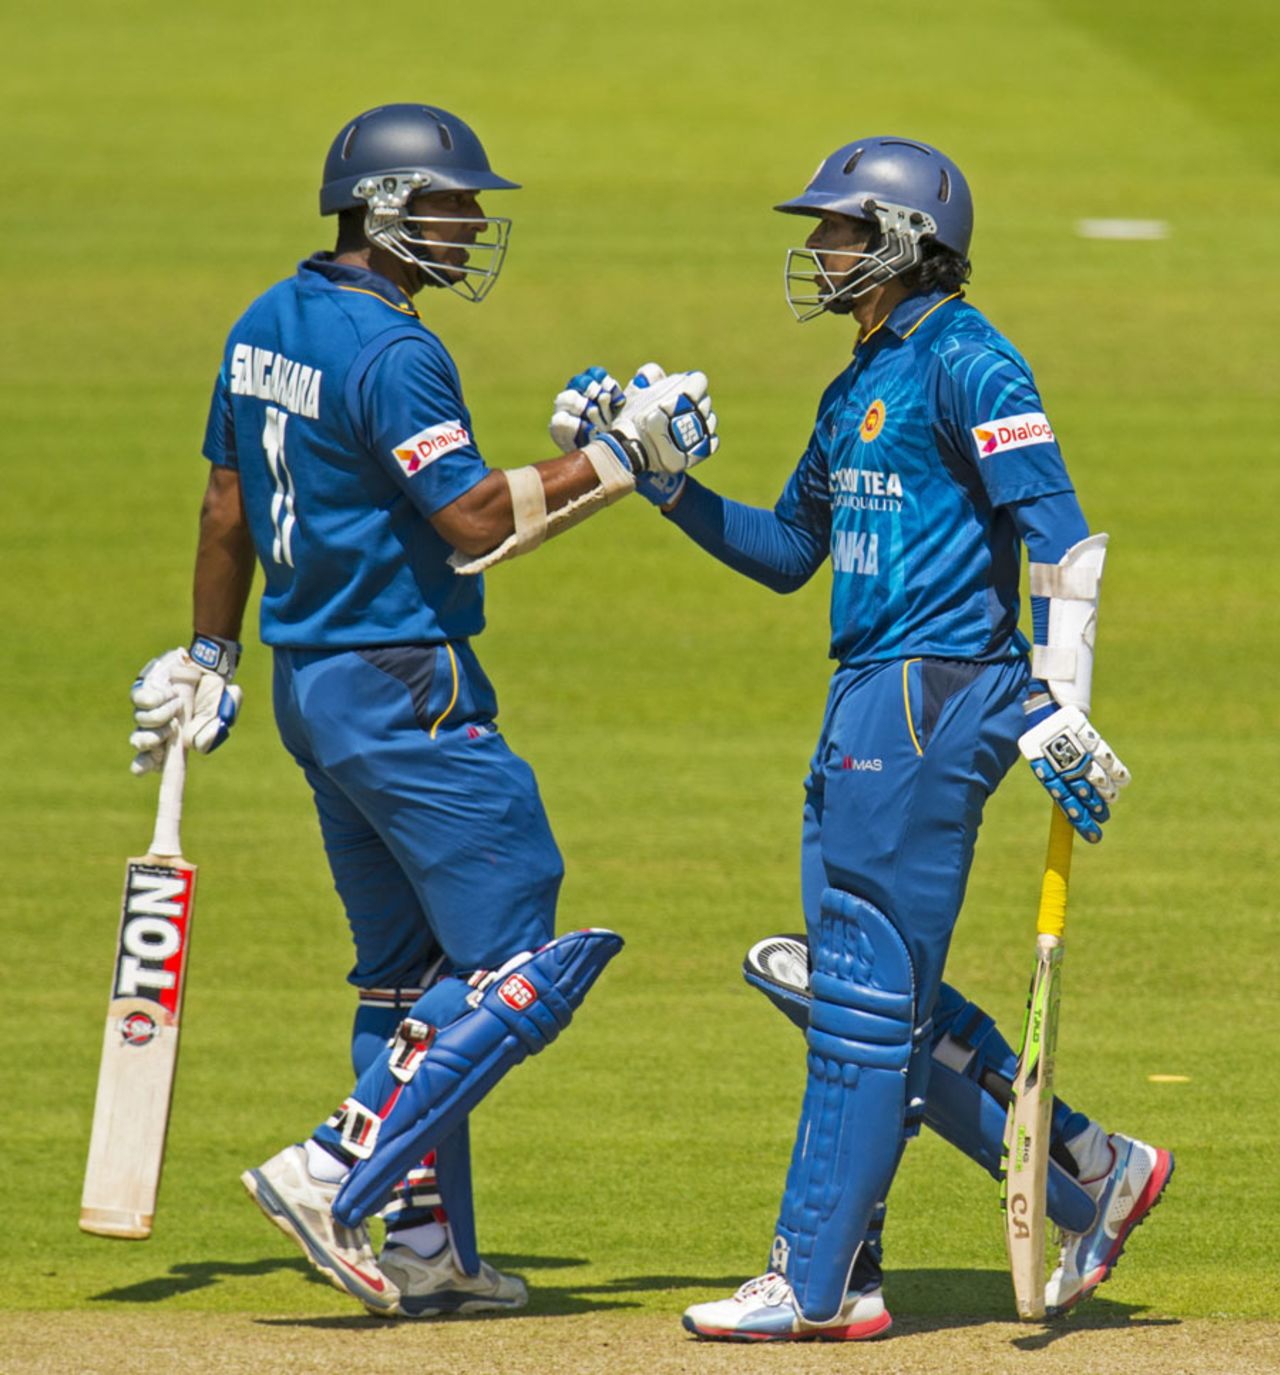 Kumar Sangakkara and Tillakaratne Dilshan put on 172 for the second wicket, England v Sri Lanka, 4th ODI, Lord's, May 31, 2014